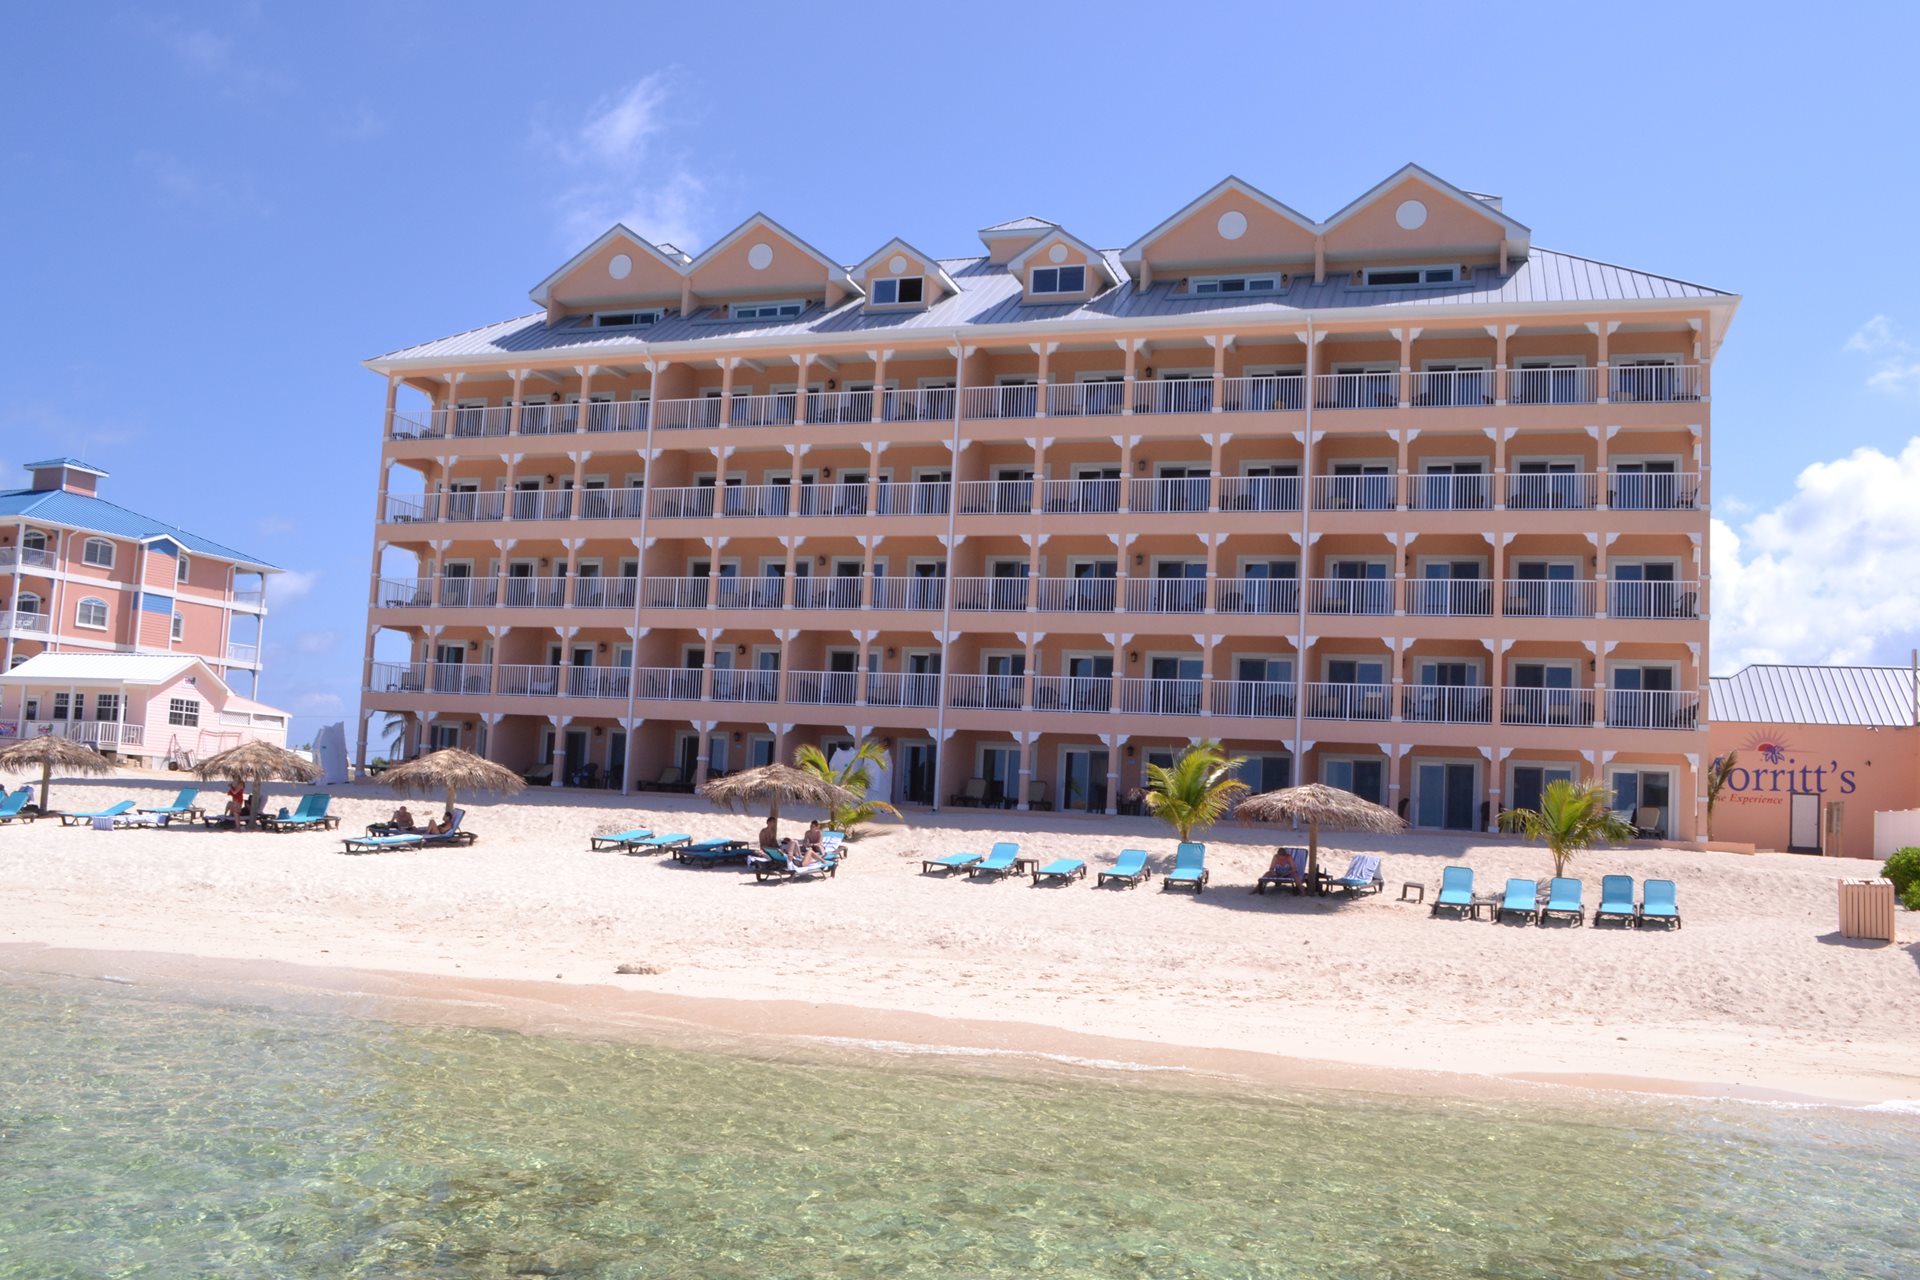 Morritt's Resorts Cayman